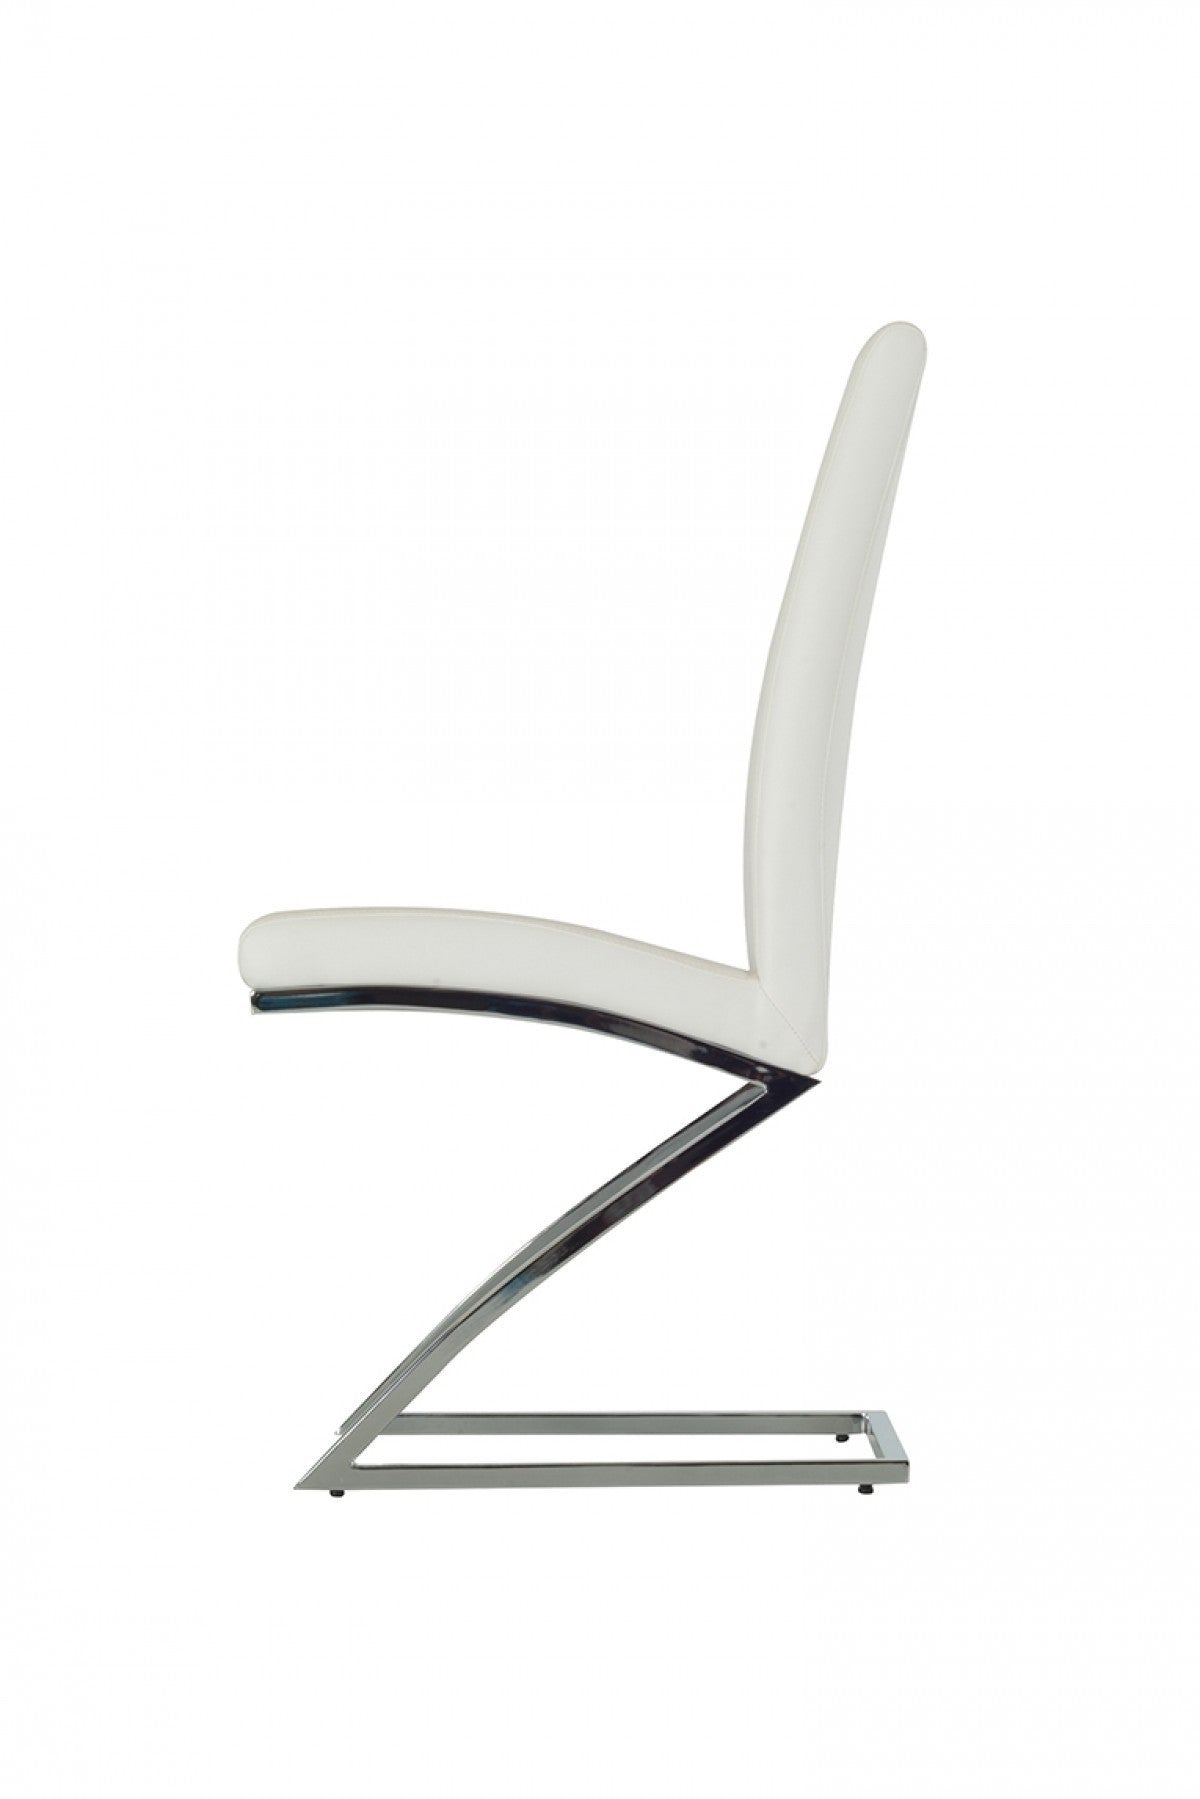 Angora - Modern White Dining Chair Set of 2